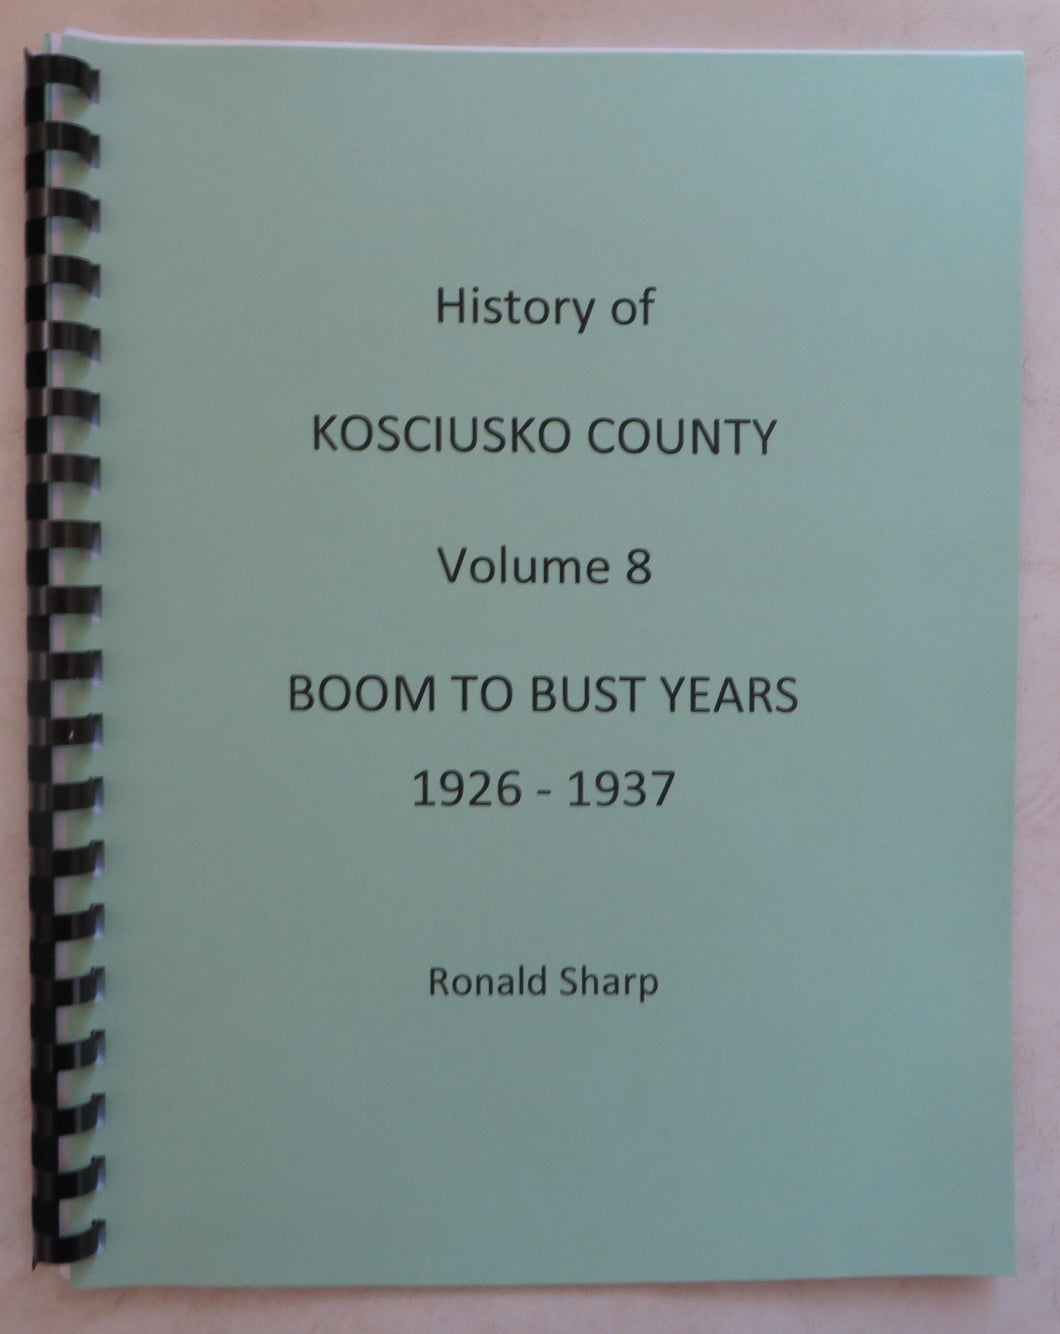 History of Kosciusko County, Volume 8, Boom to Bust Years, 1926-1937